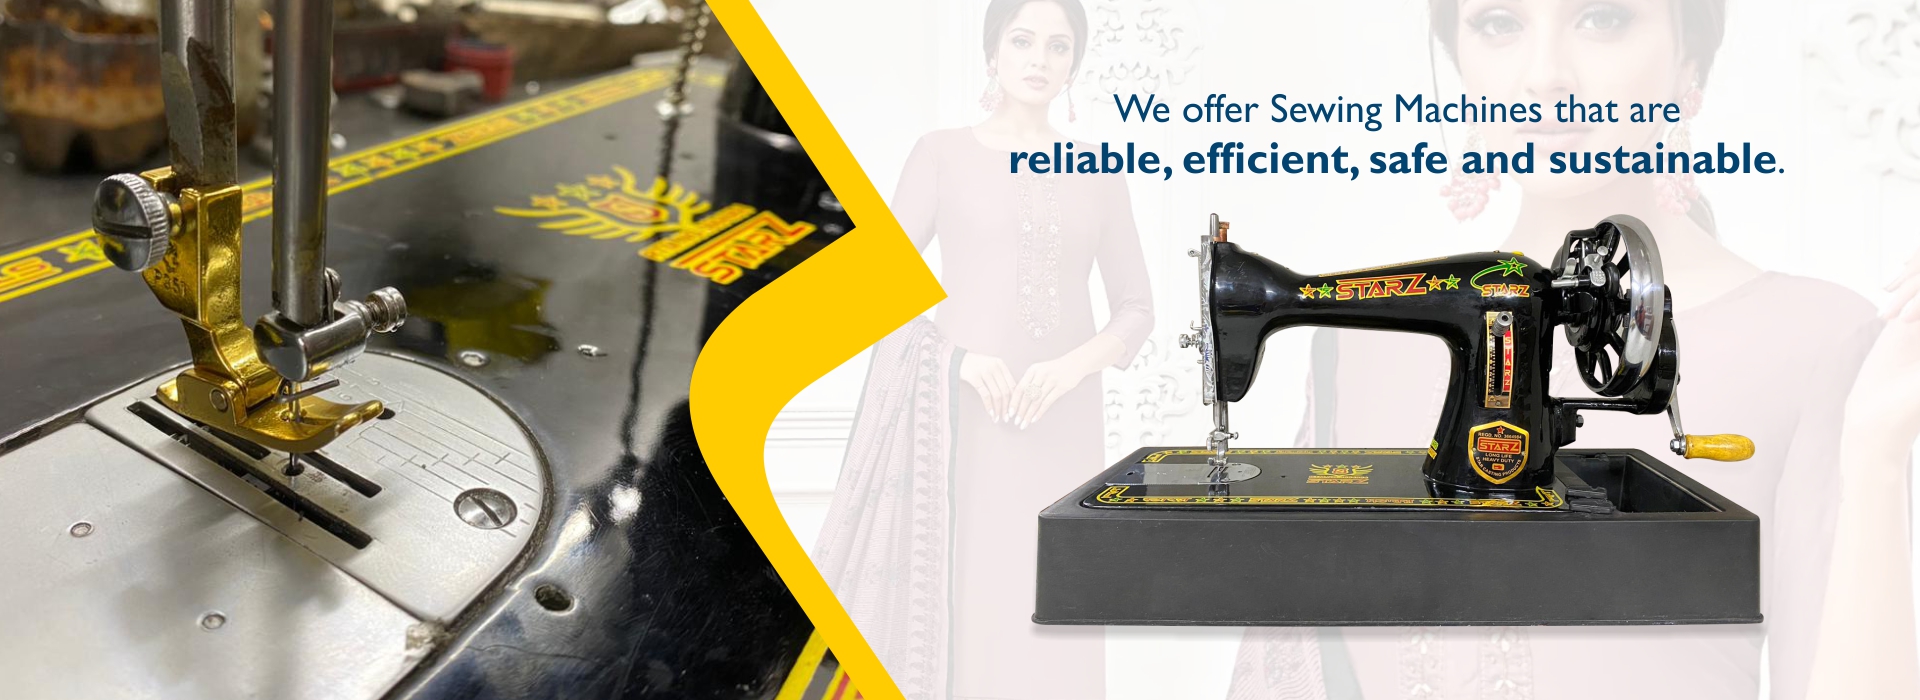 sewing machine manufacturers in ludhiana, punjab